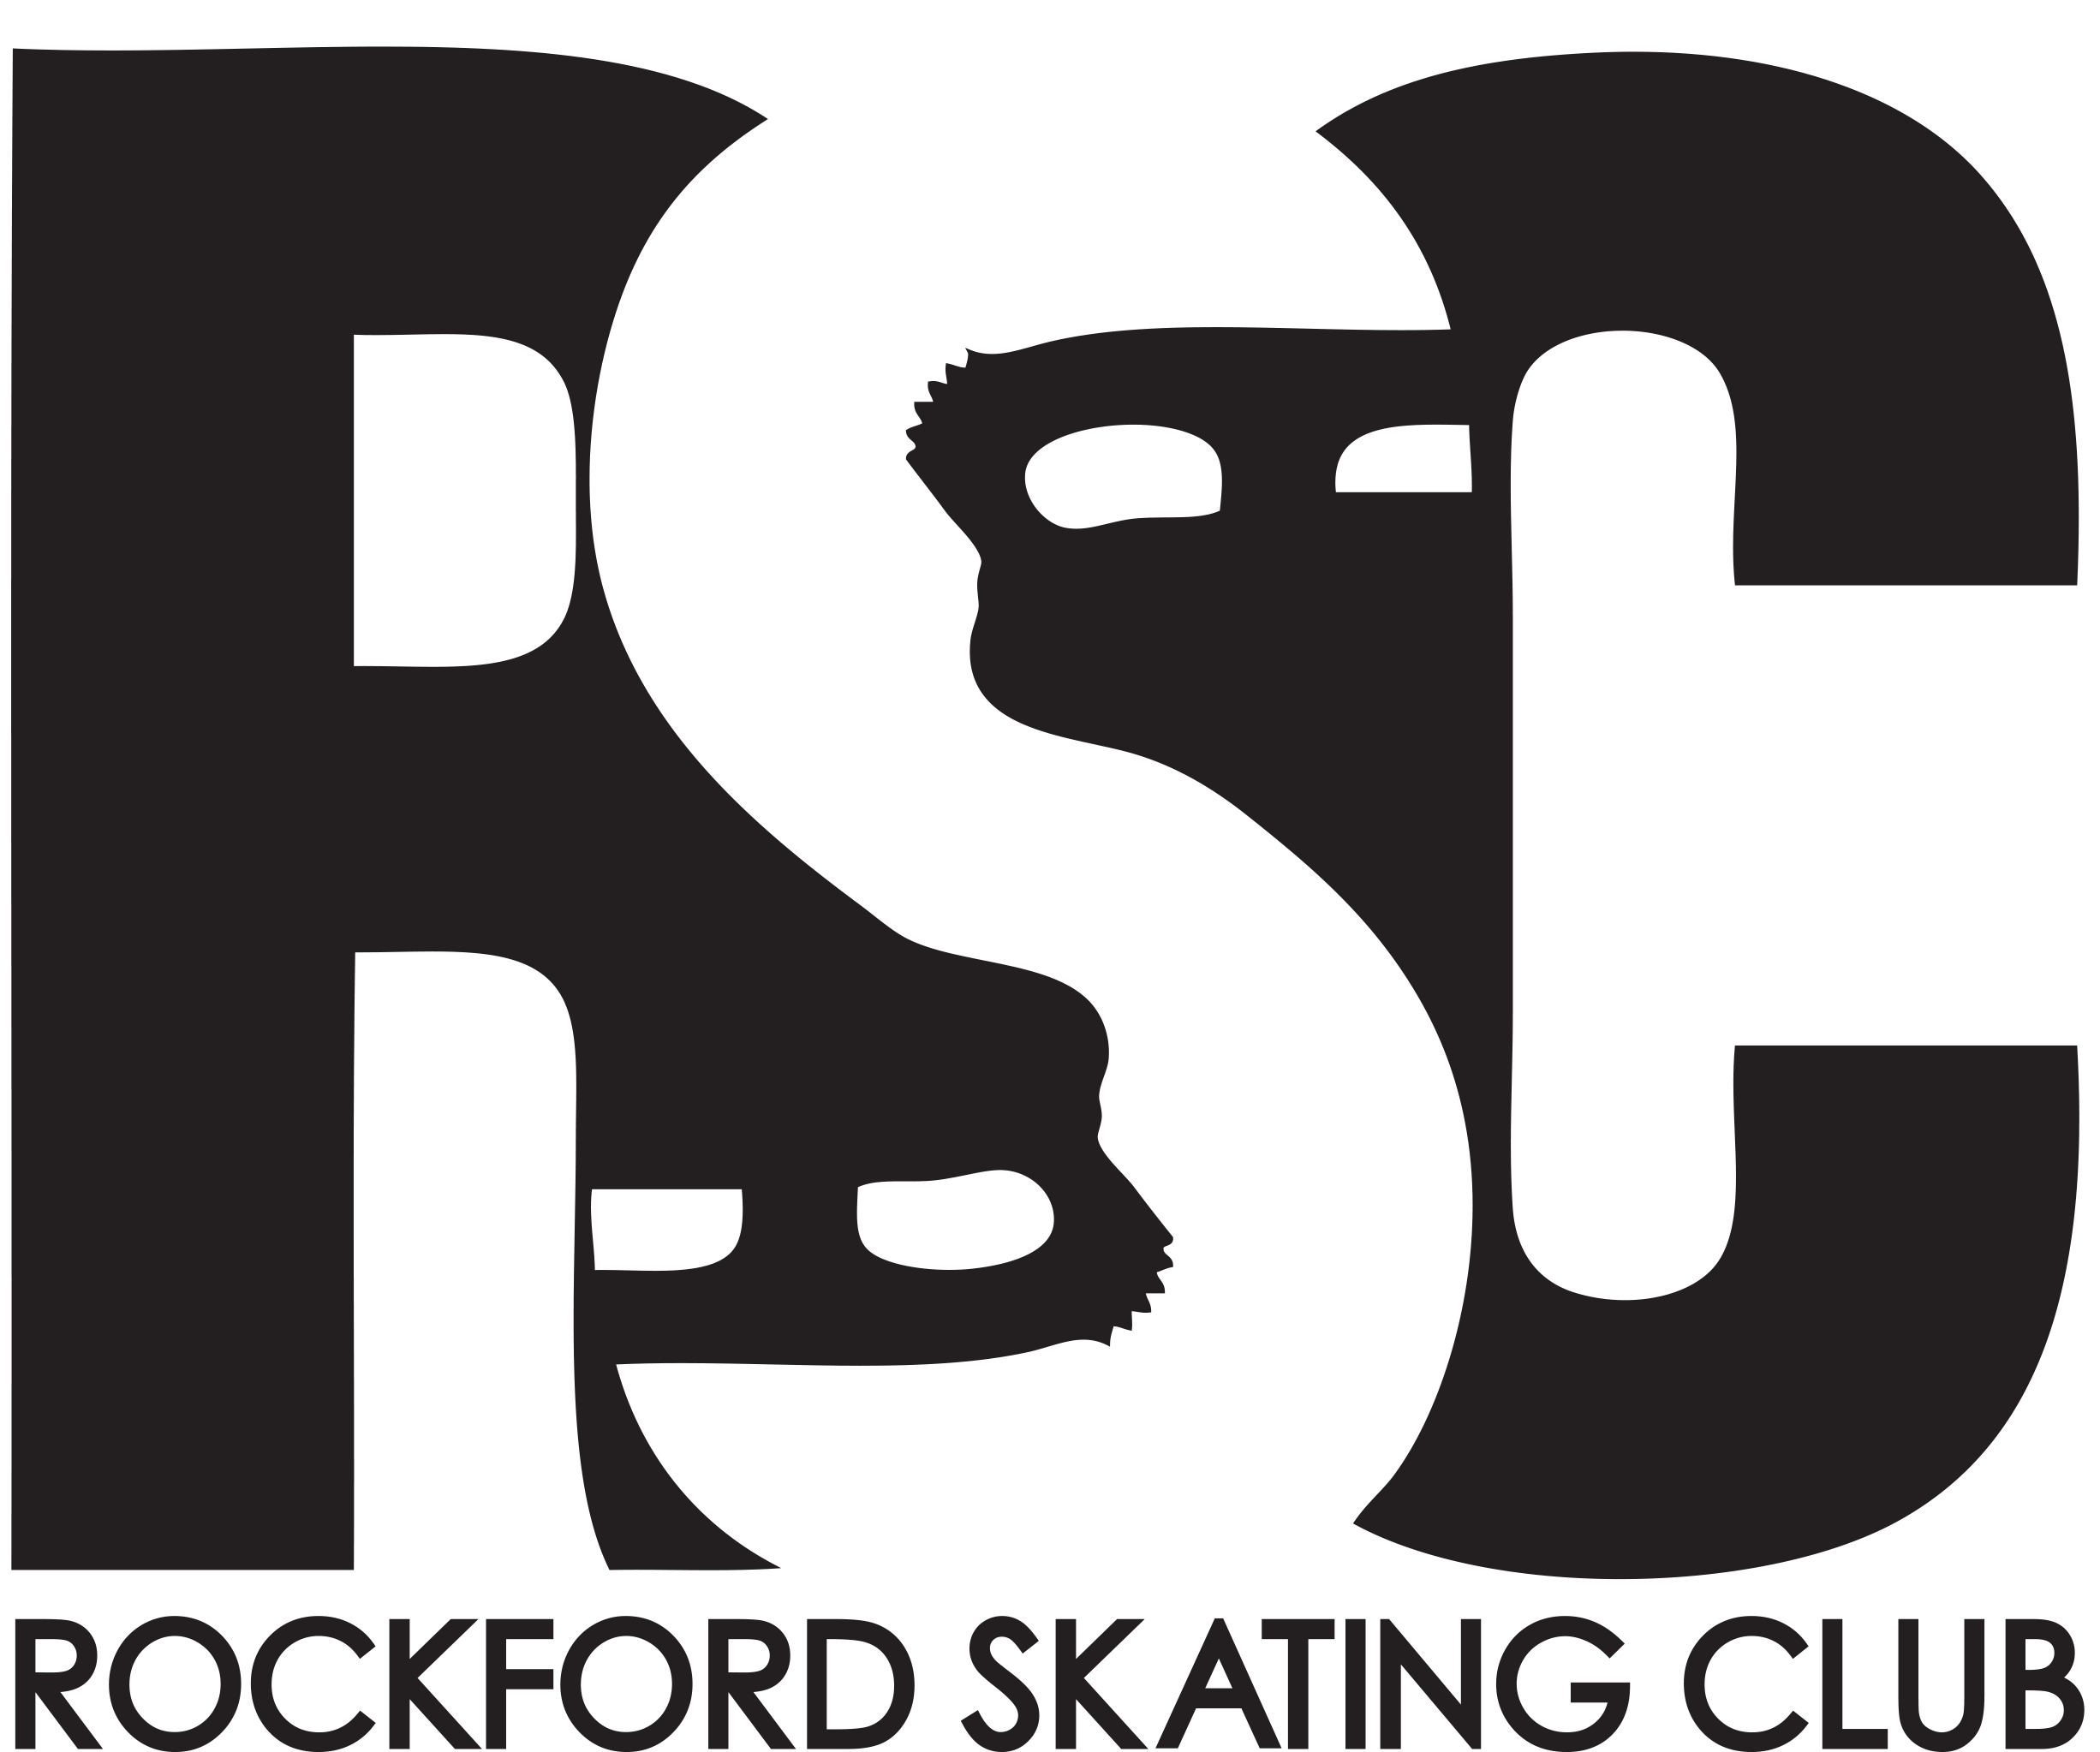 Rockford Skating Club Logo